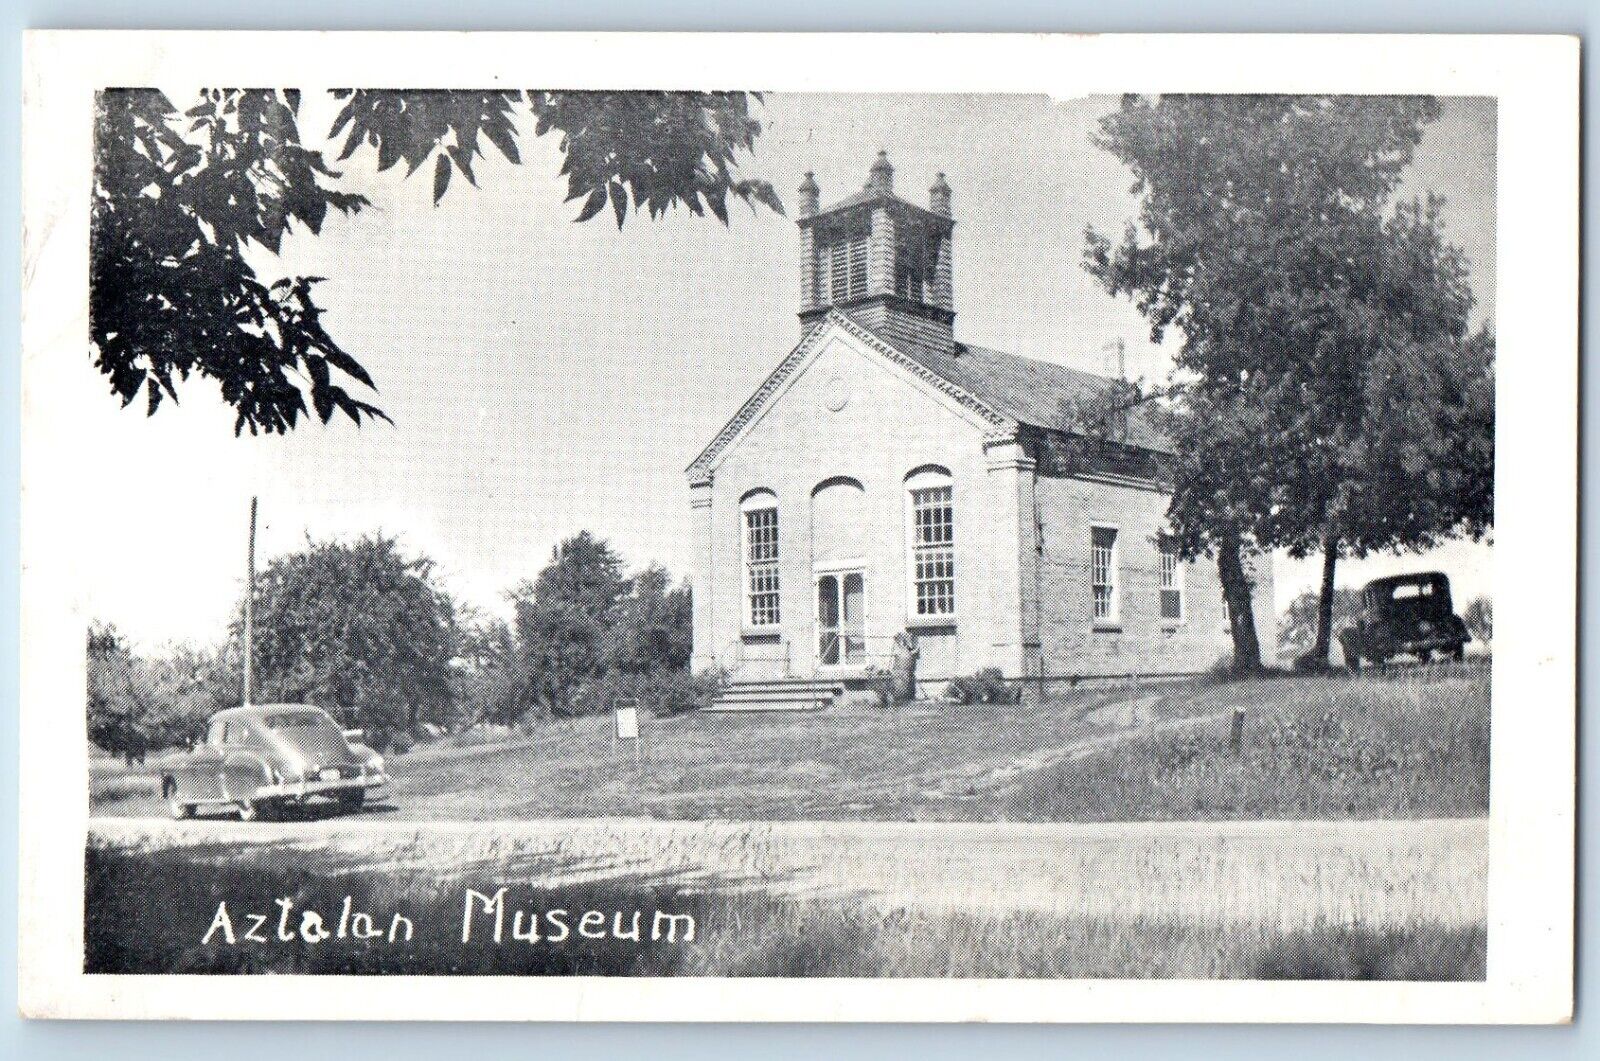 Lake Mills Arizona Postcard Aztalan Museum Exterior Building View c1960 Vintage